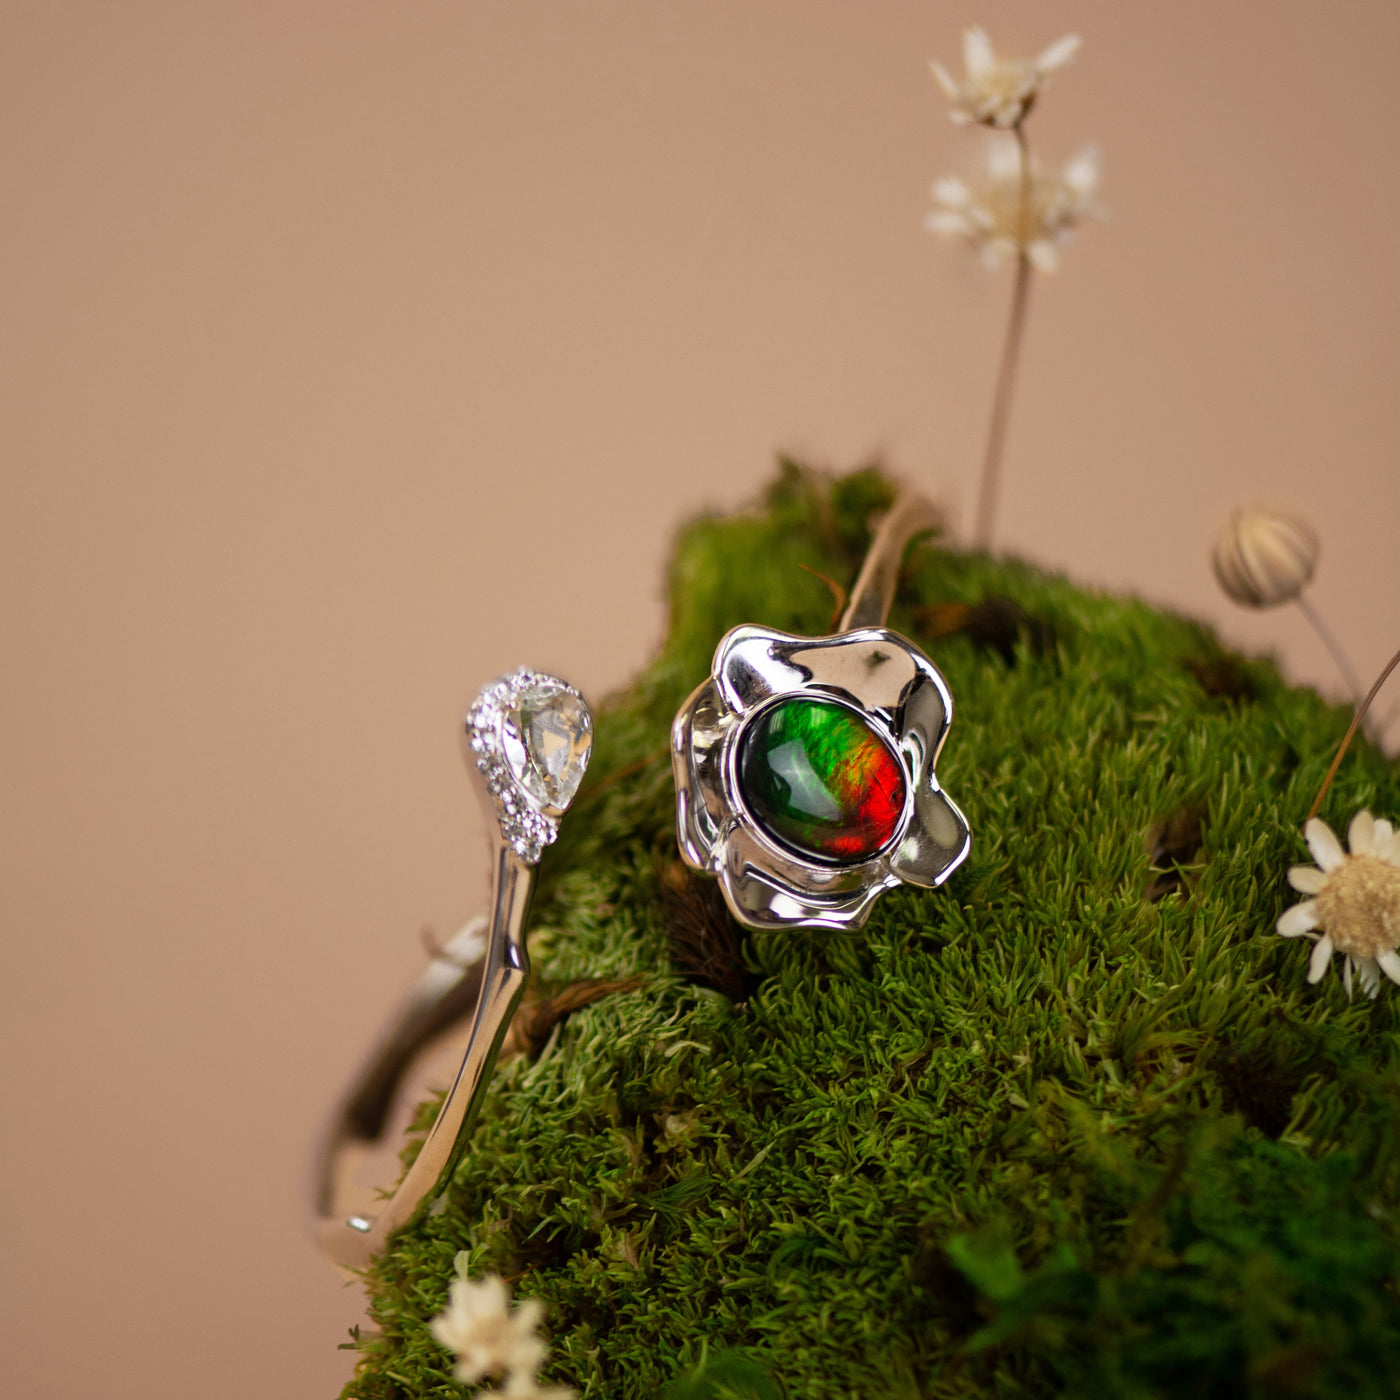 Bloom ammolite pendant, earring, ring and bracelet set in sterling silver